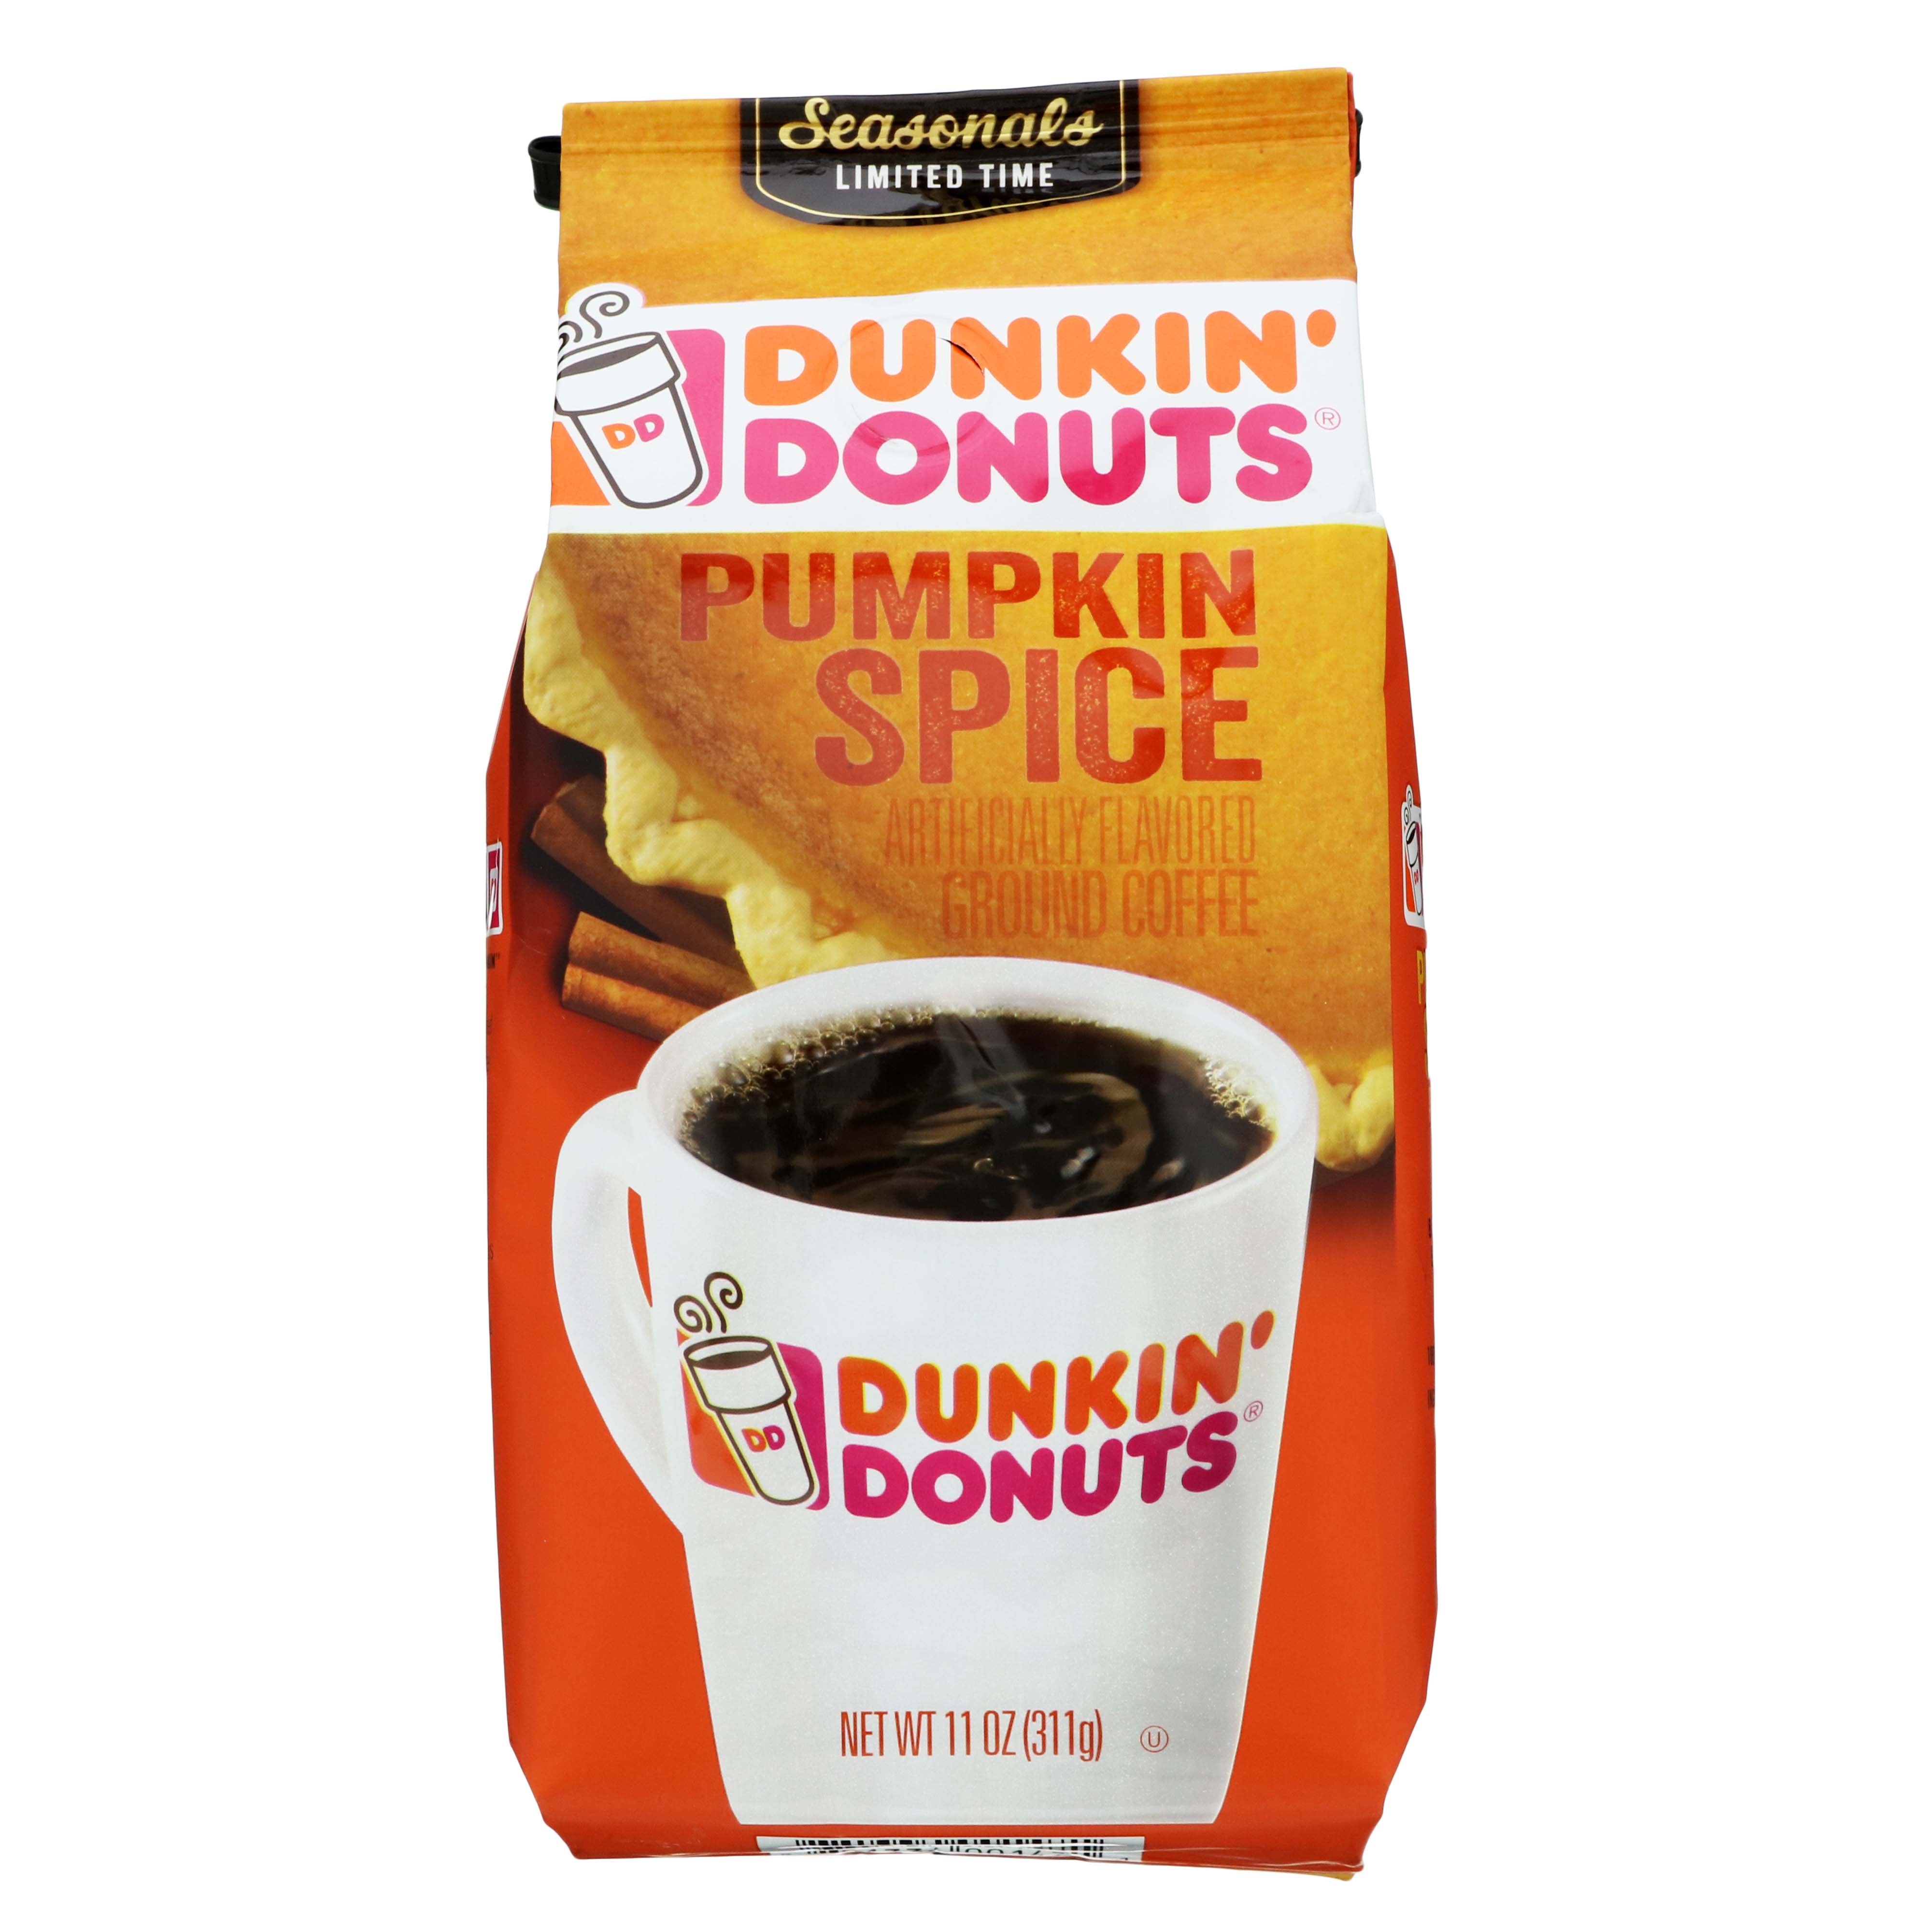 Dunkin' Donuts Pumpkin Spice Ground Coffee Shop Coffee at HEB